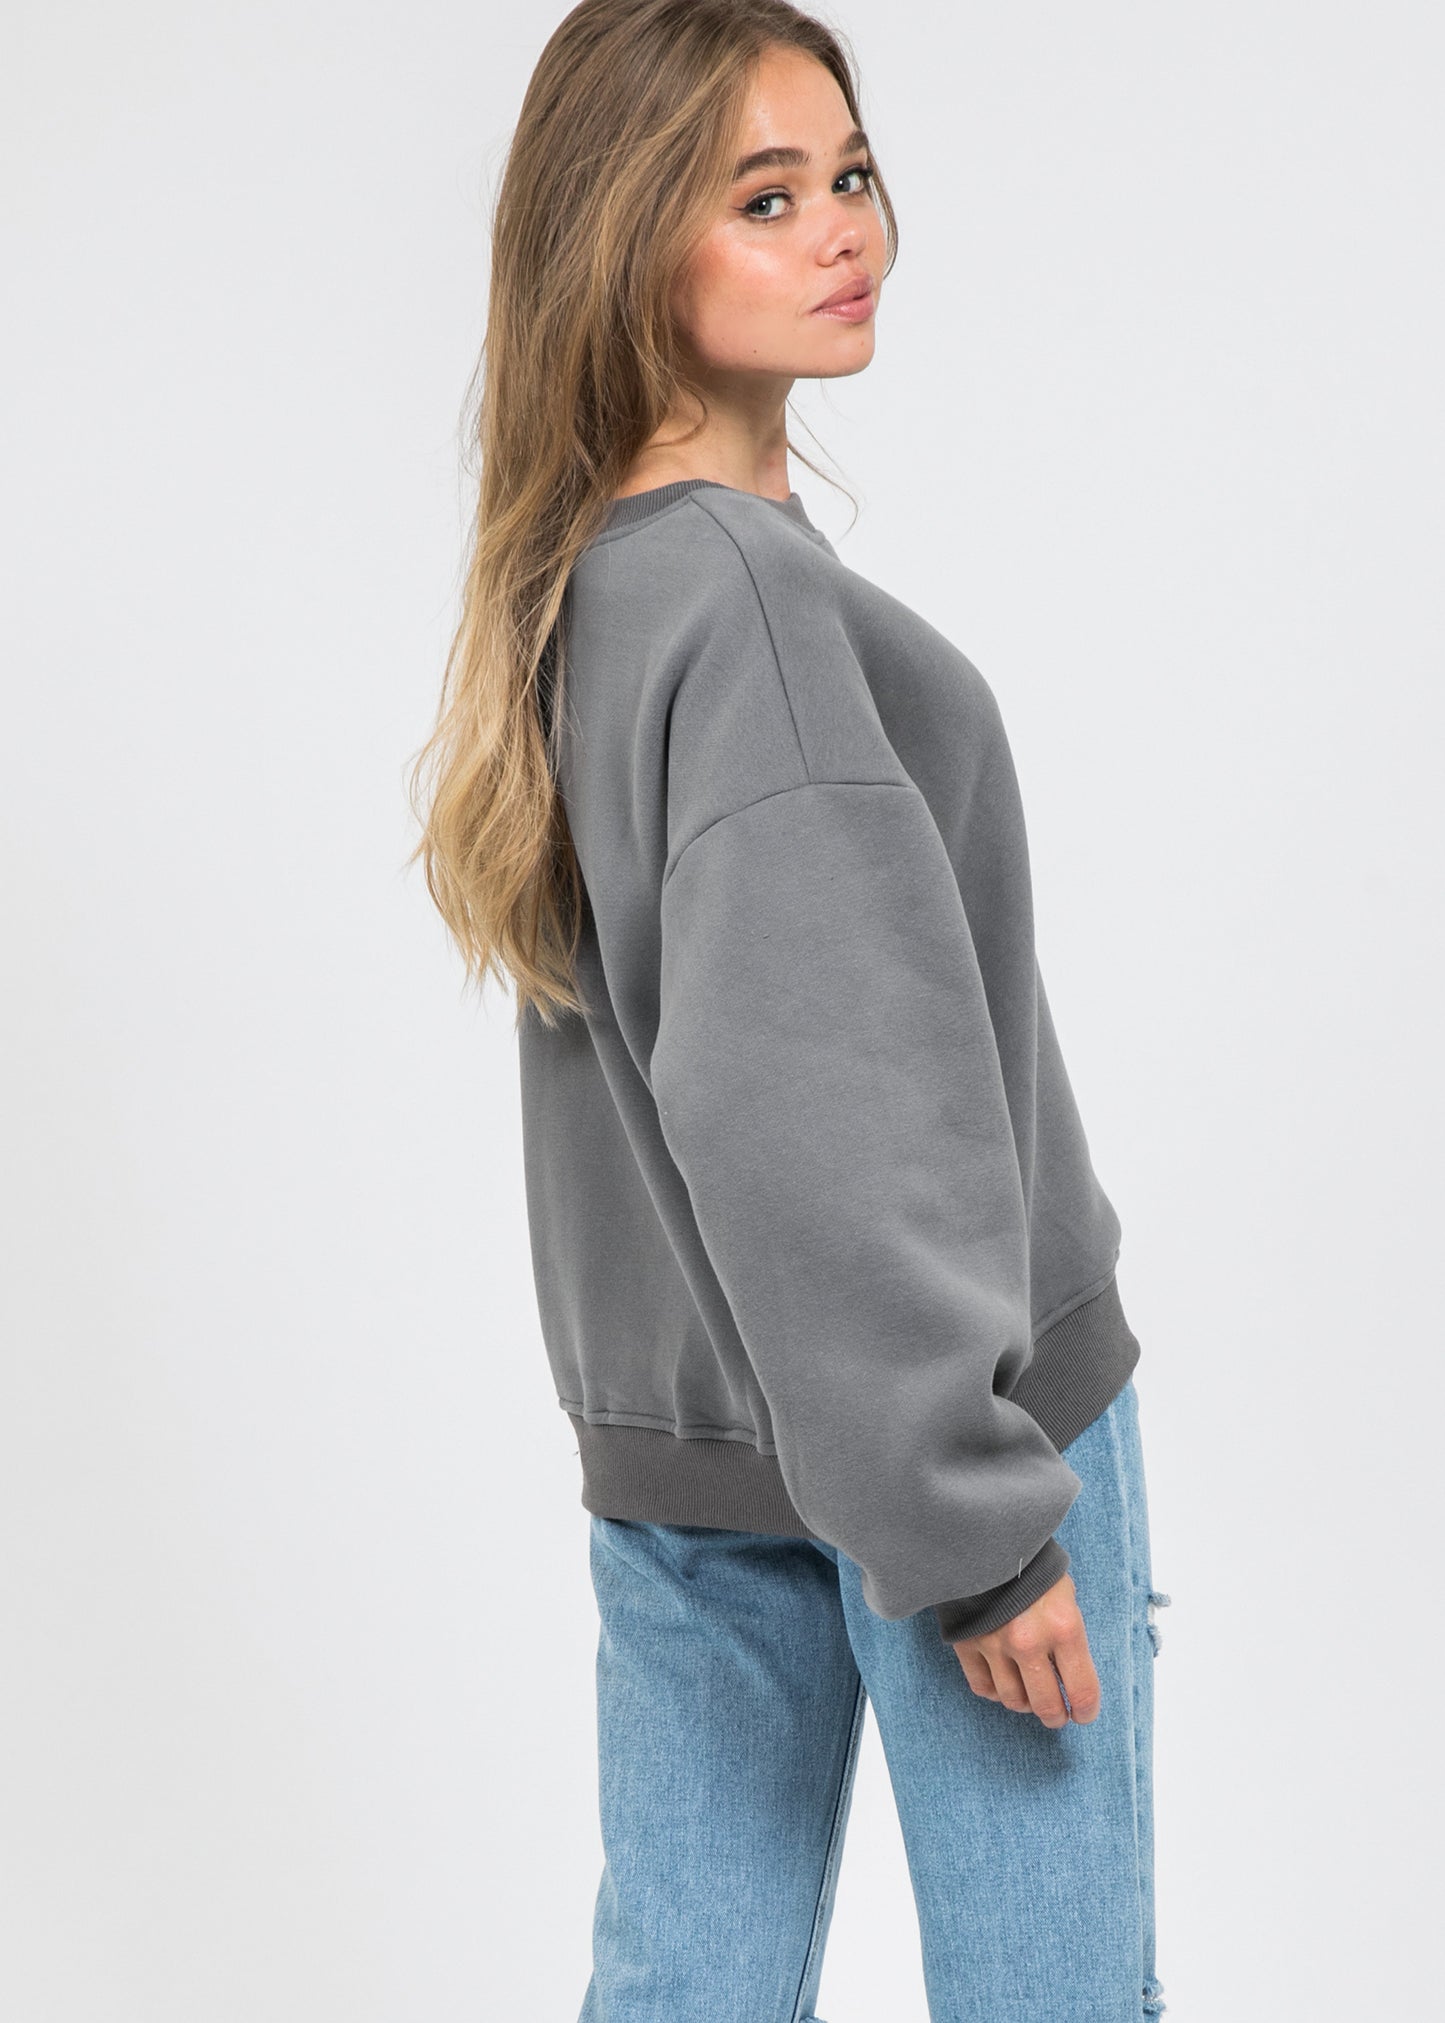 Cotton oversized sweatshirt in dark grey